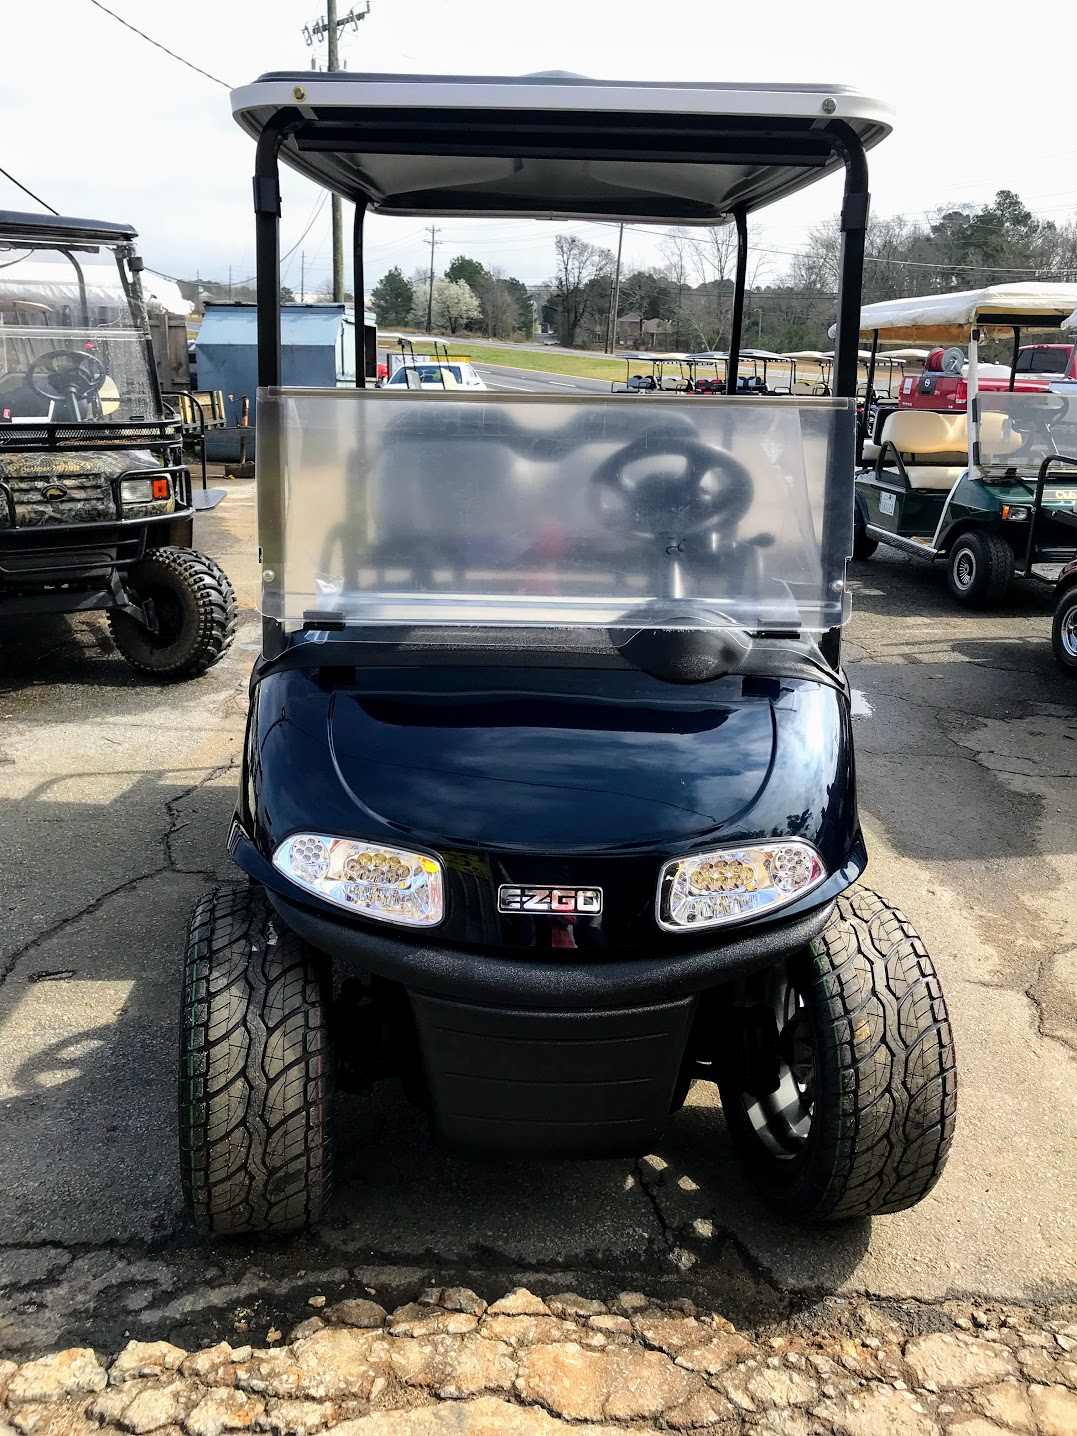 refurbished golf carts